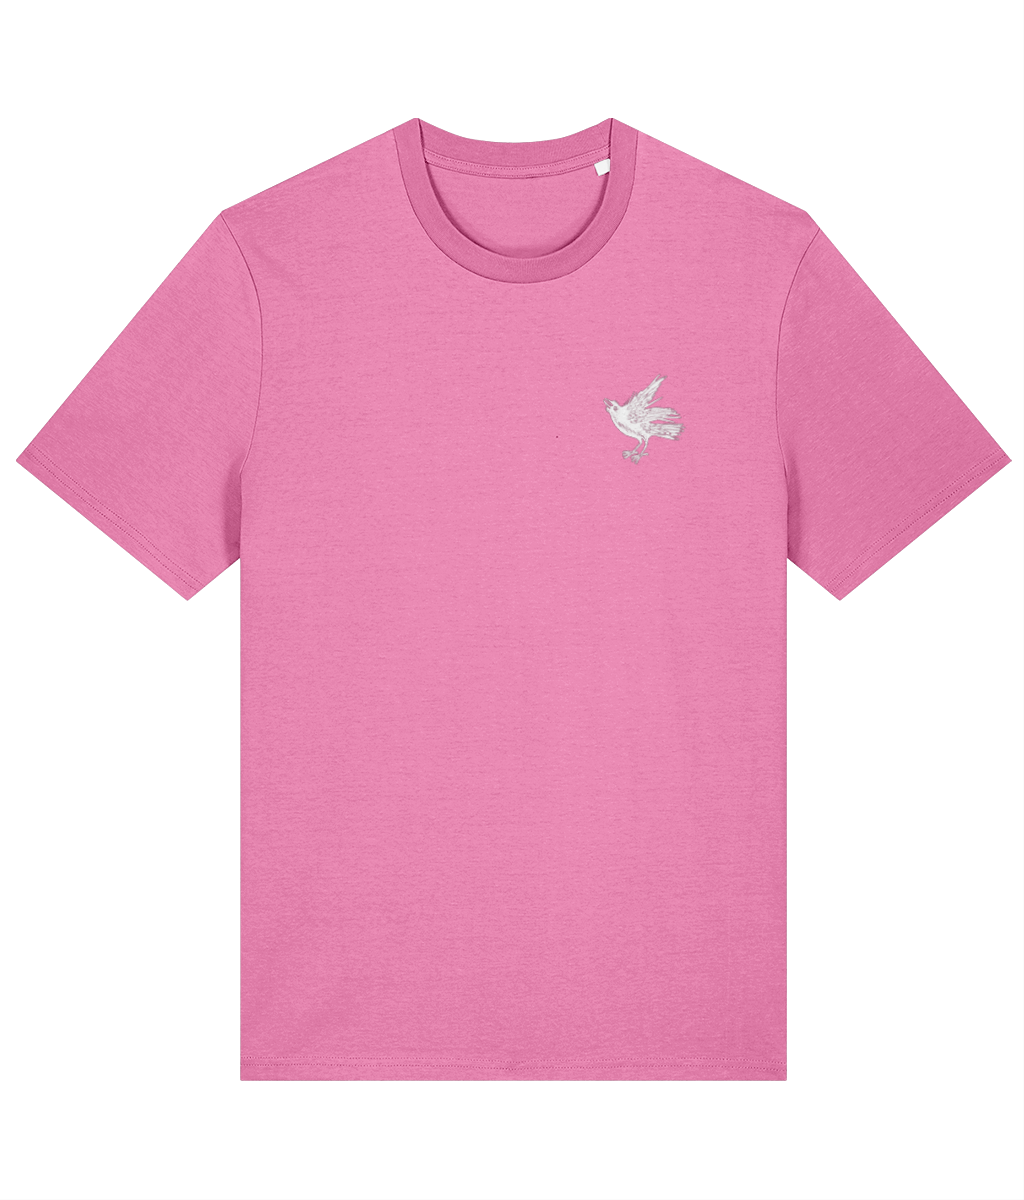 Unisex Tshirt - Signature White Crow